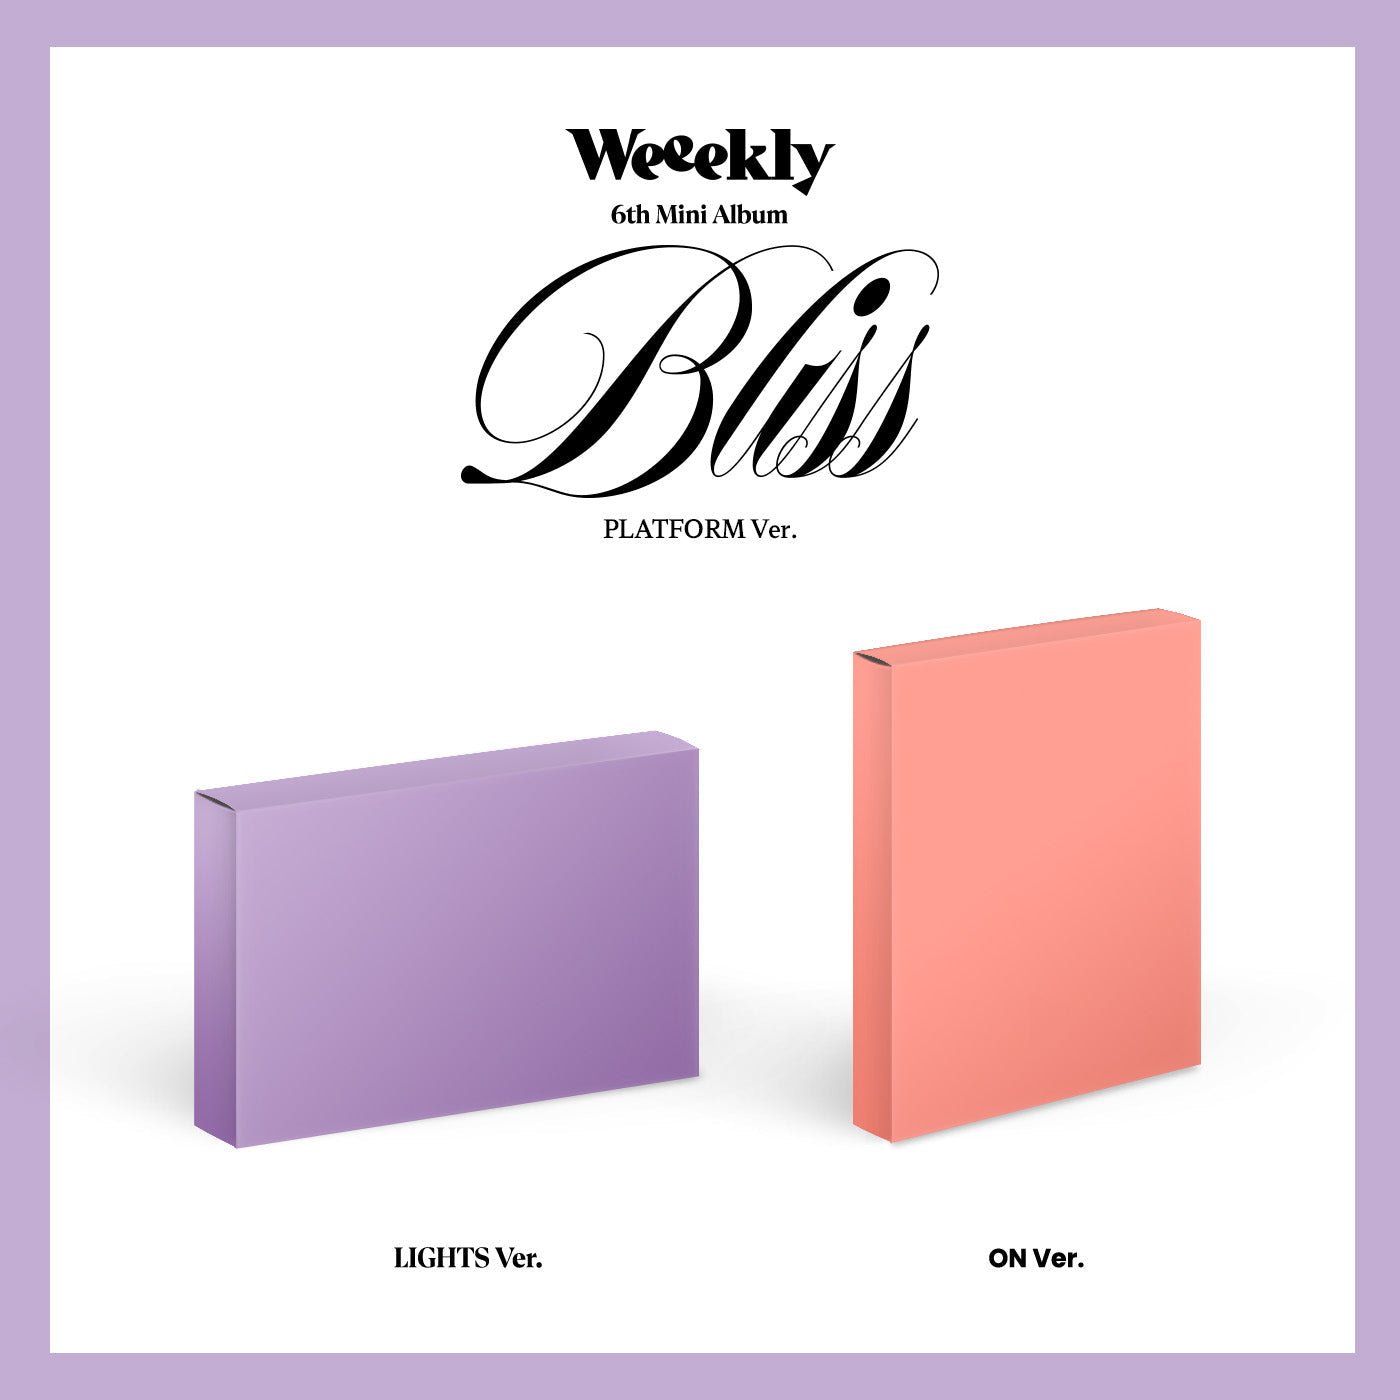 Weeekly - 6th Mini Album [Bliss] Platform Ver. - KPOPHERO